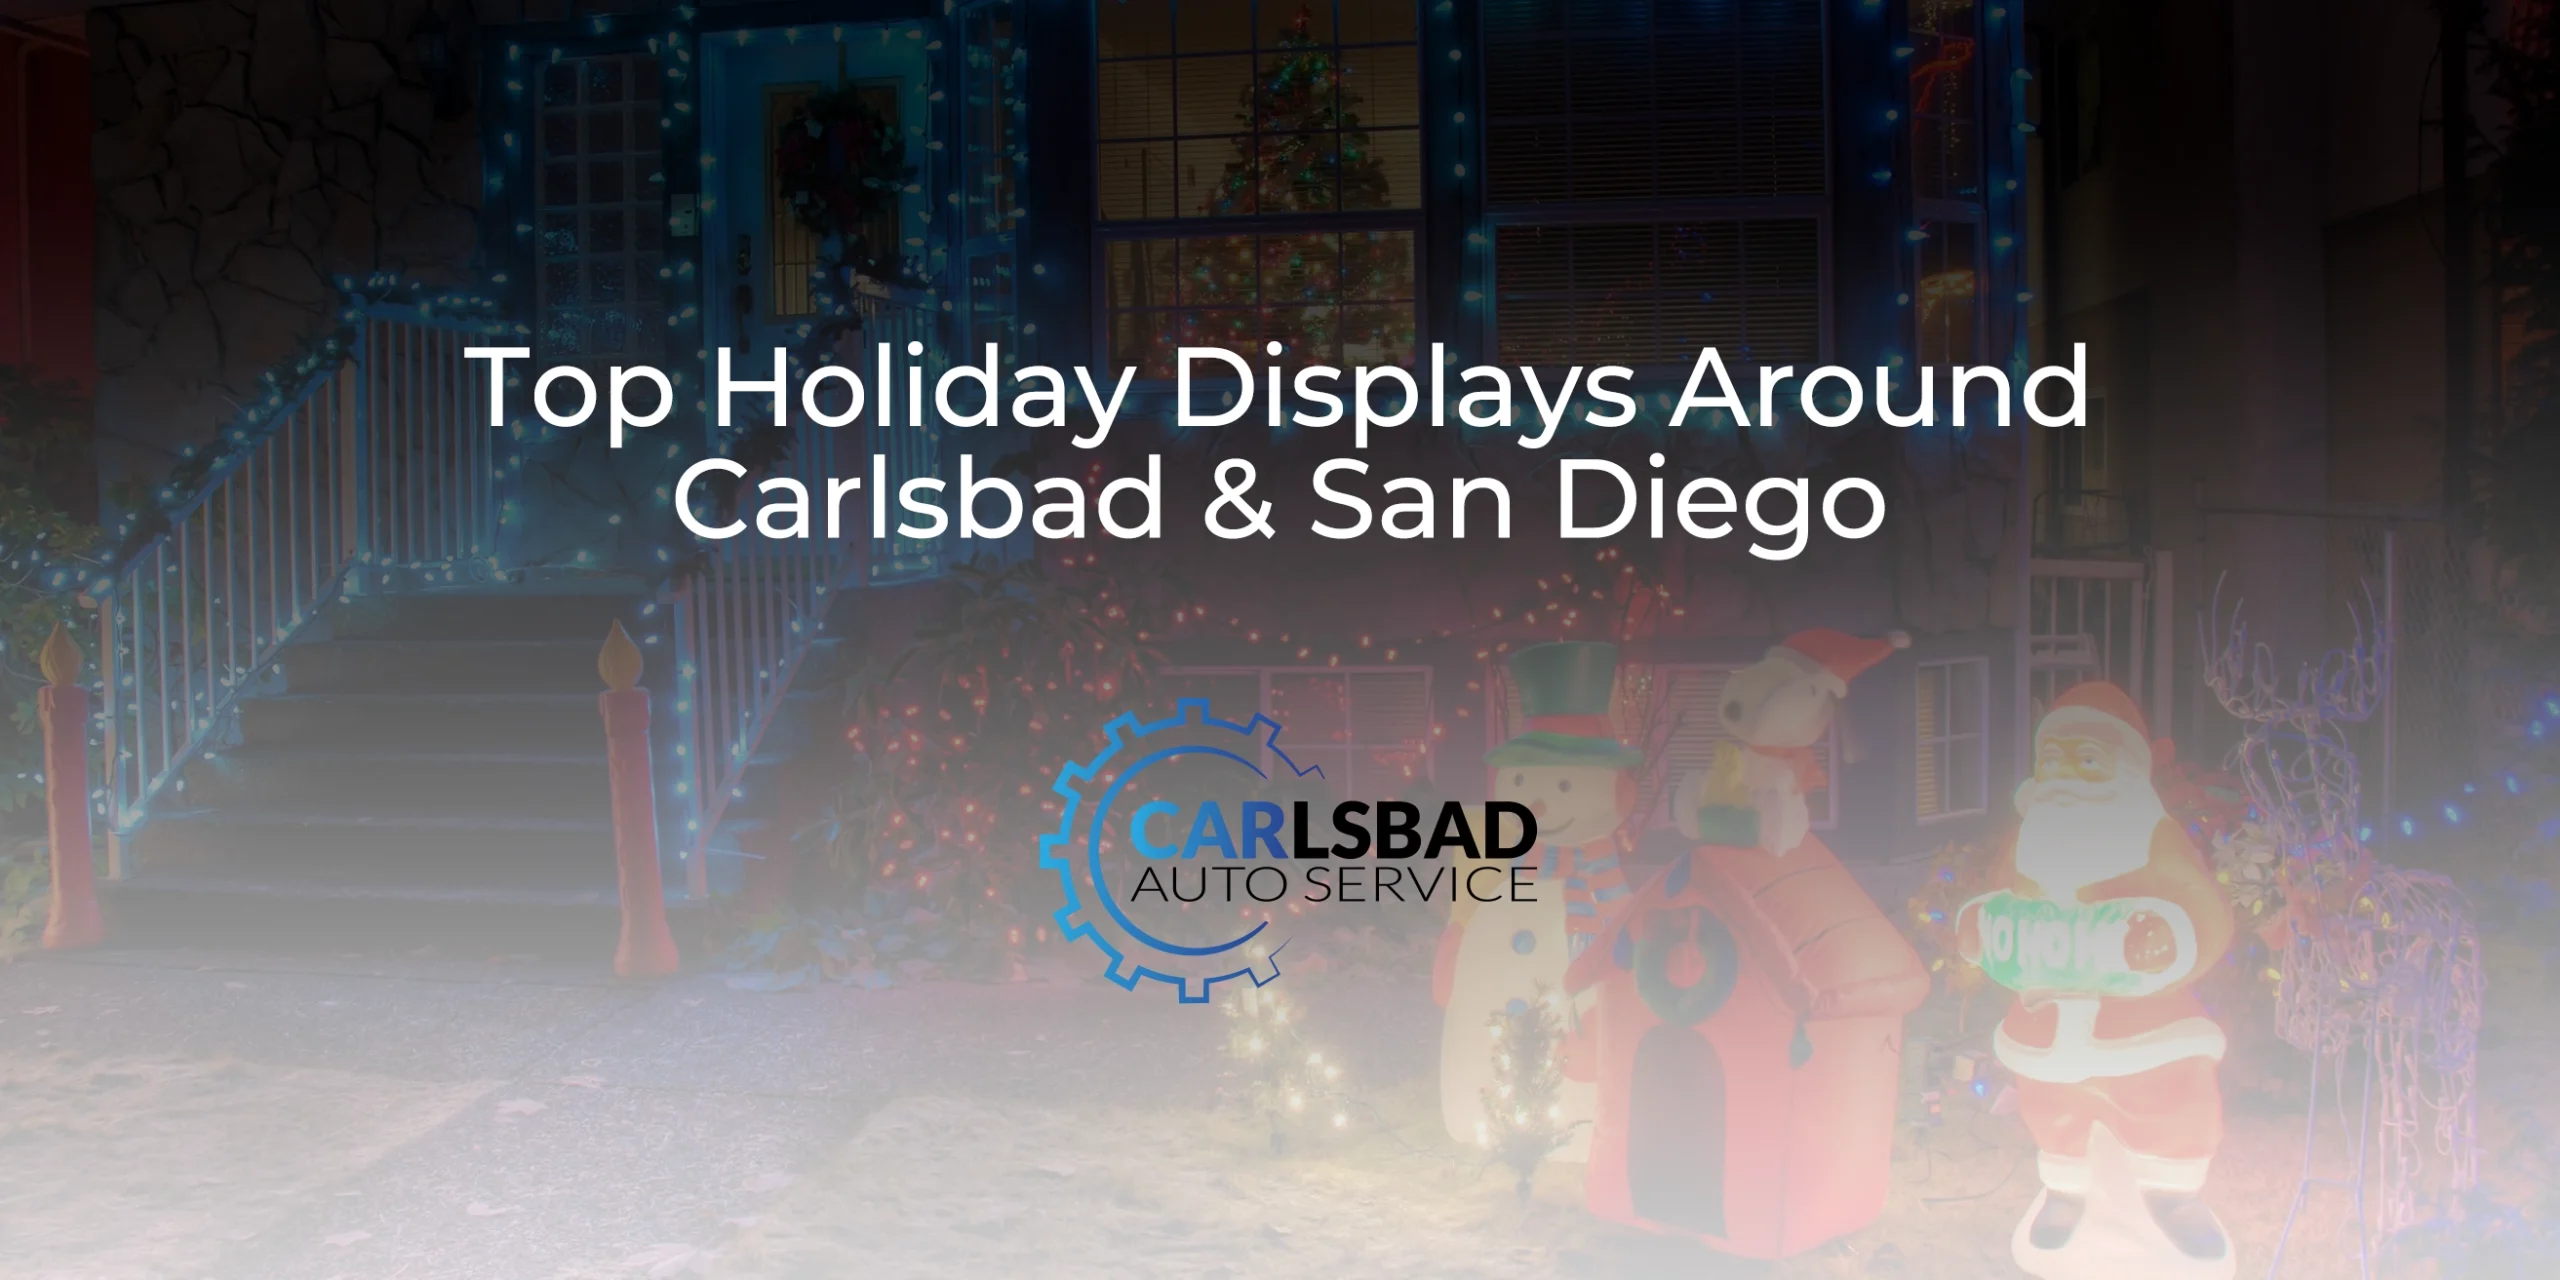 Top Holiday Displays Around Carlsbad & San Diego